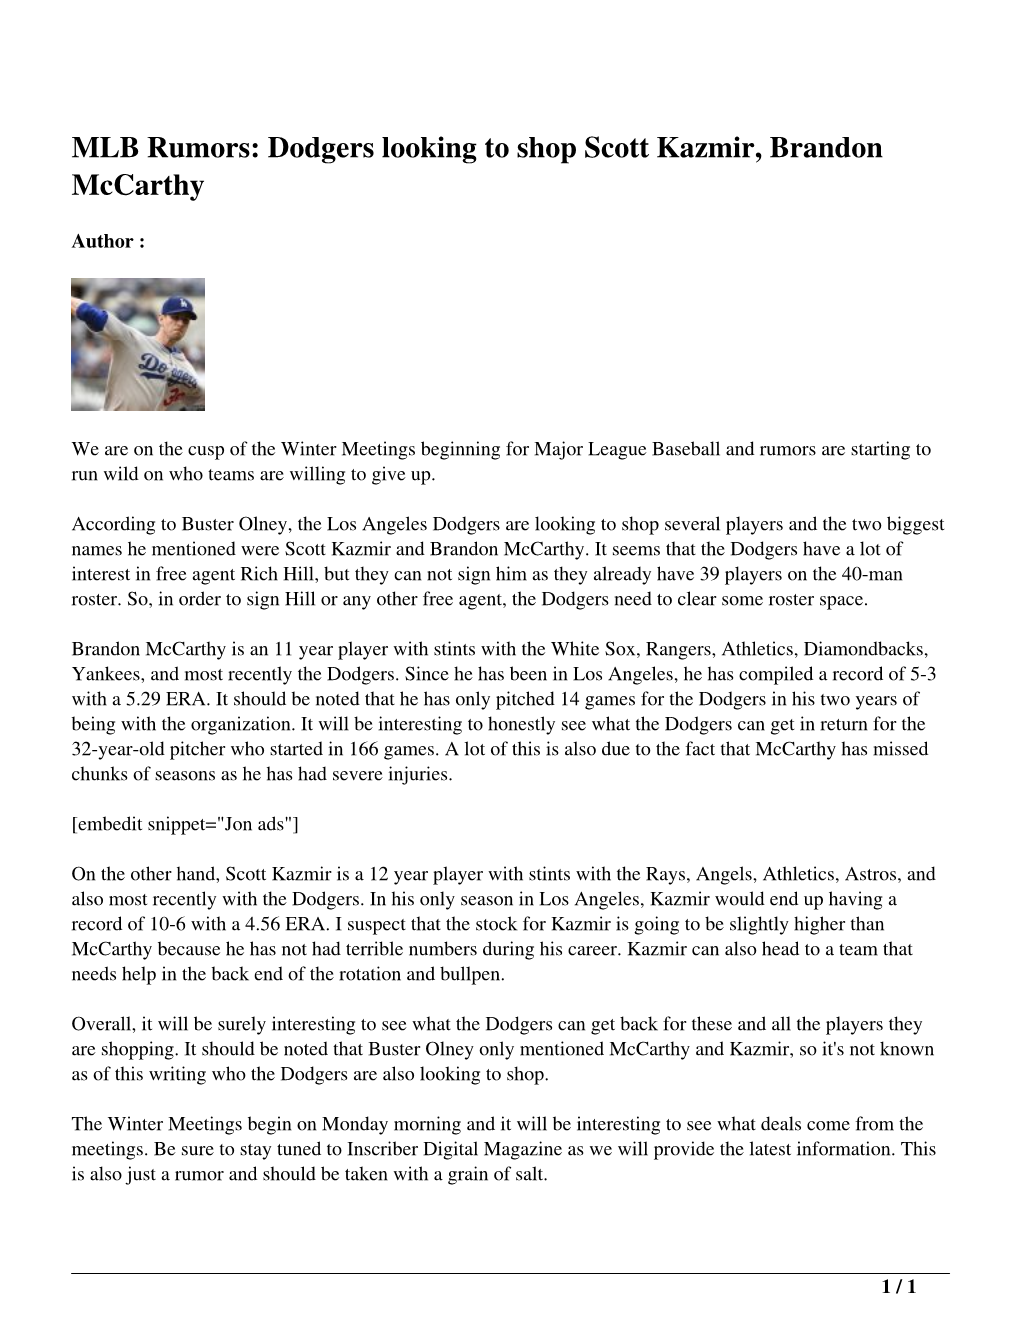 MLB Rumors: Dodgers Looking to Shop Scott Kazmir, Brandon Mccarthy